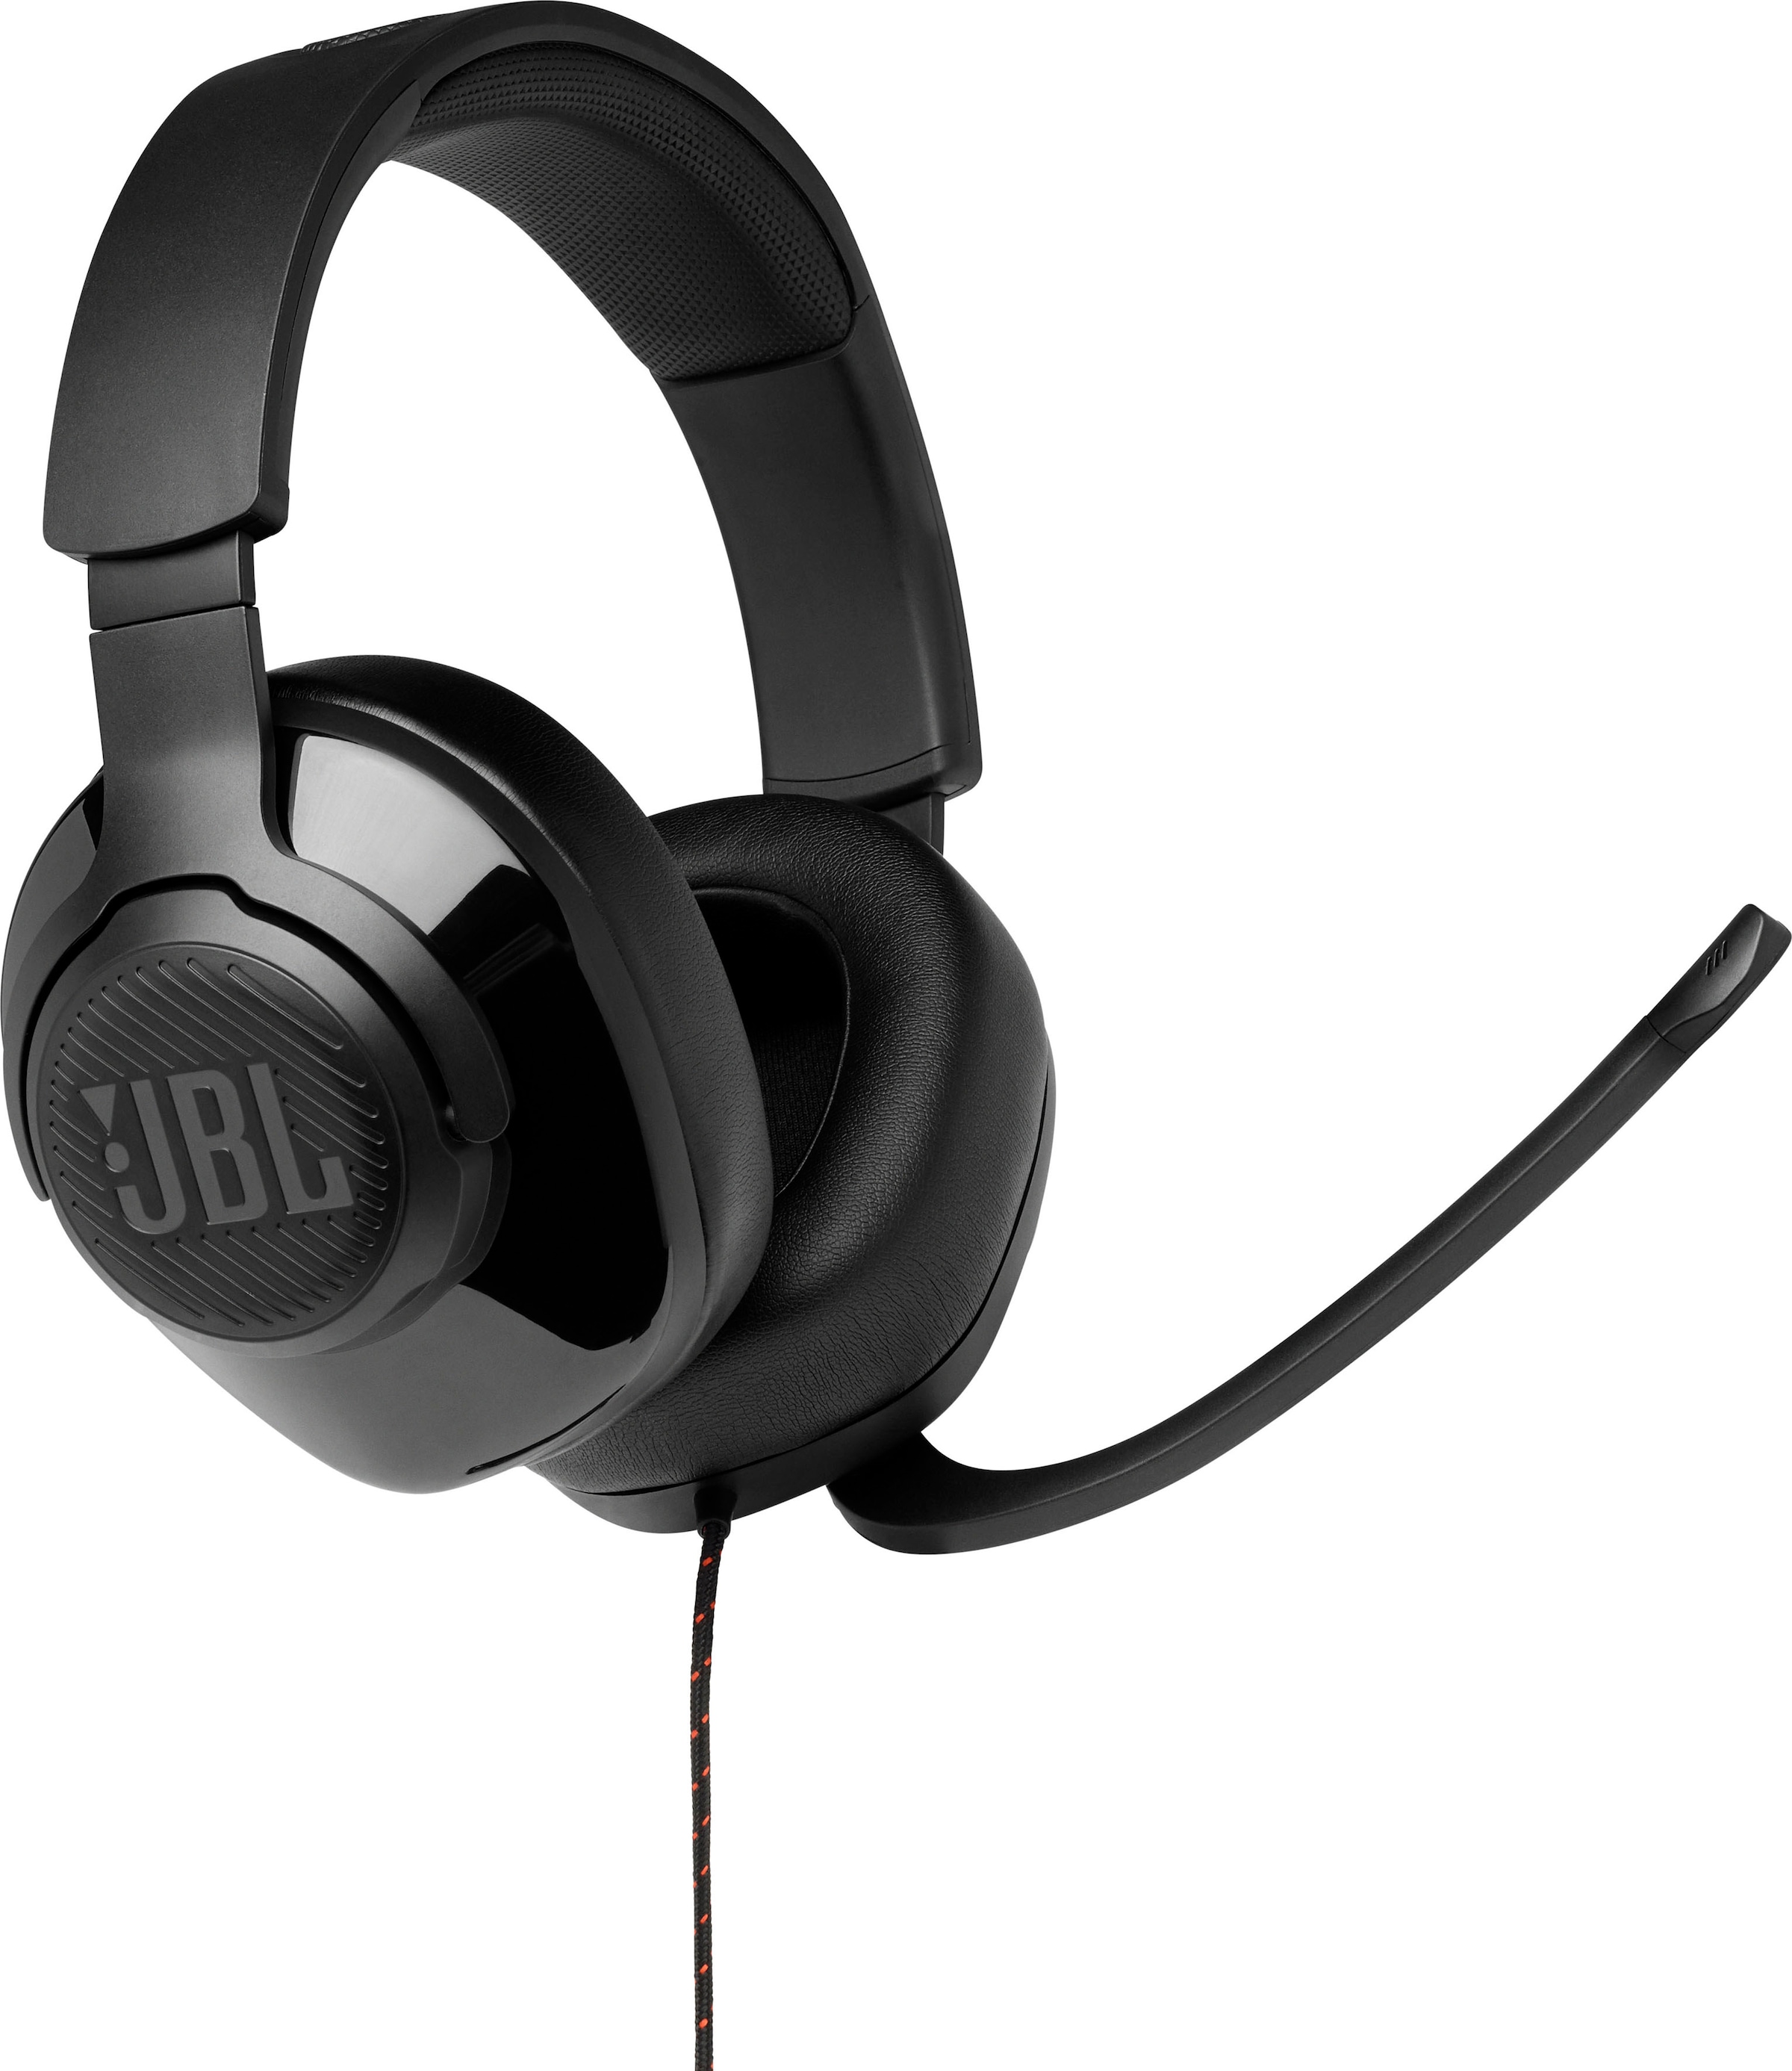 Online JBL im OTTO »QUANTUM Gaming-Headset 200« jetzt Shop